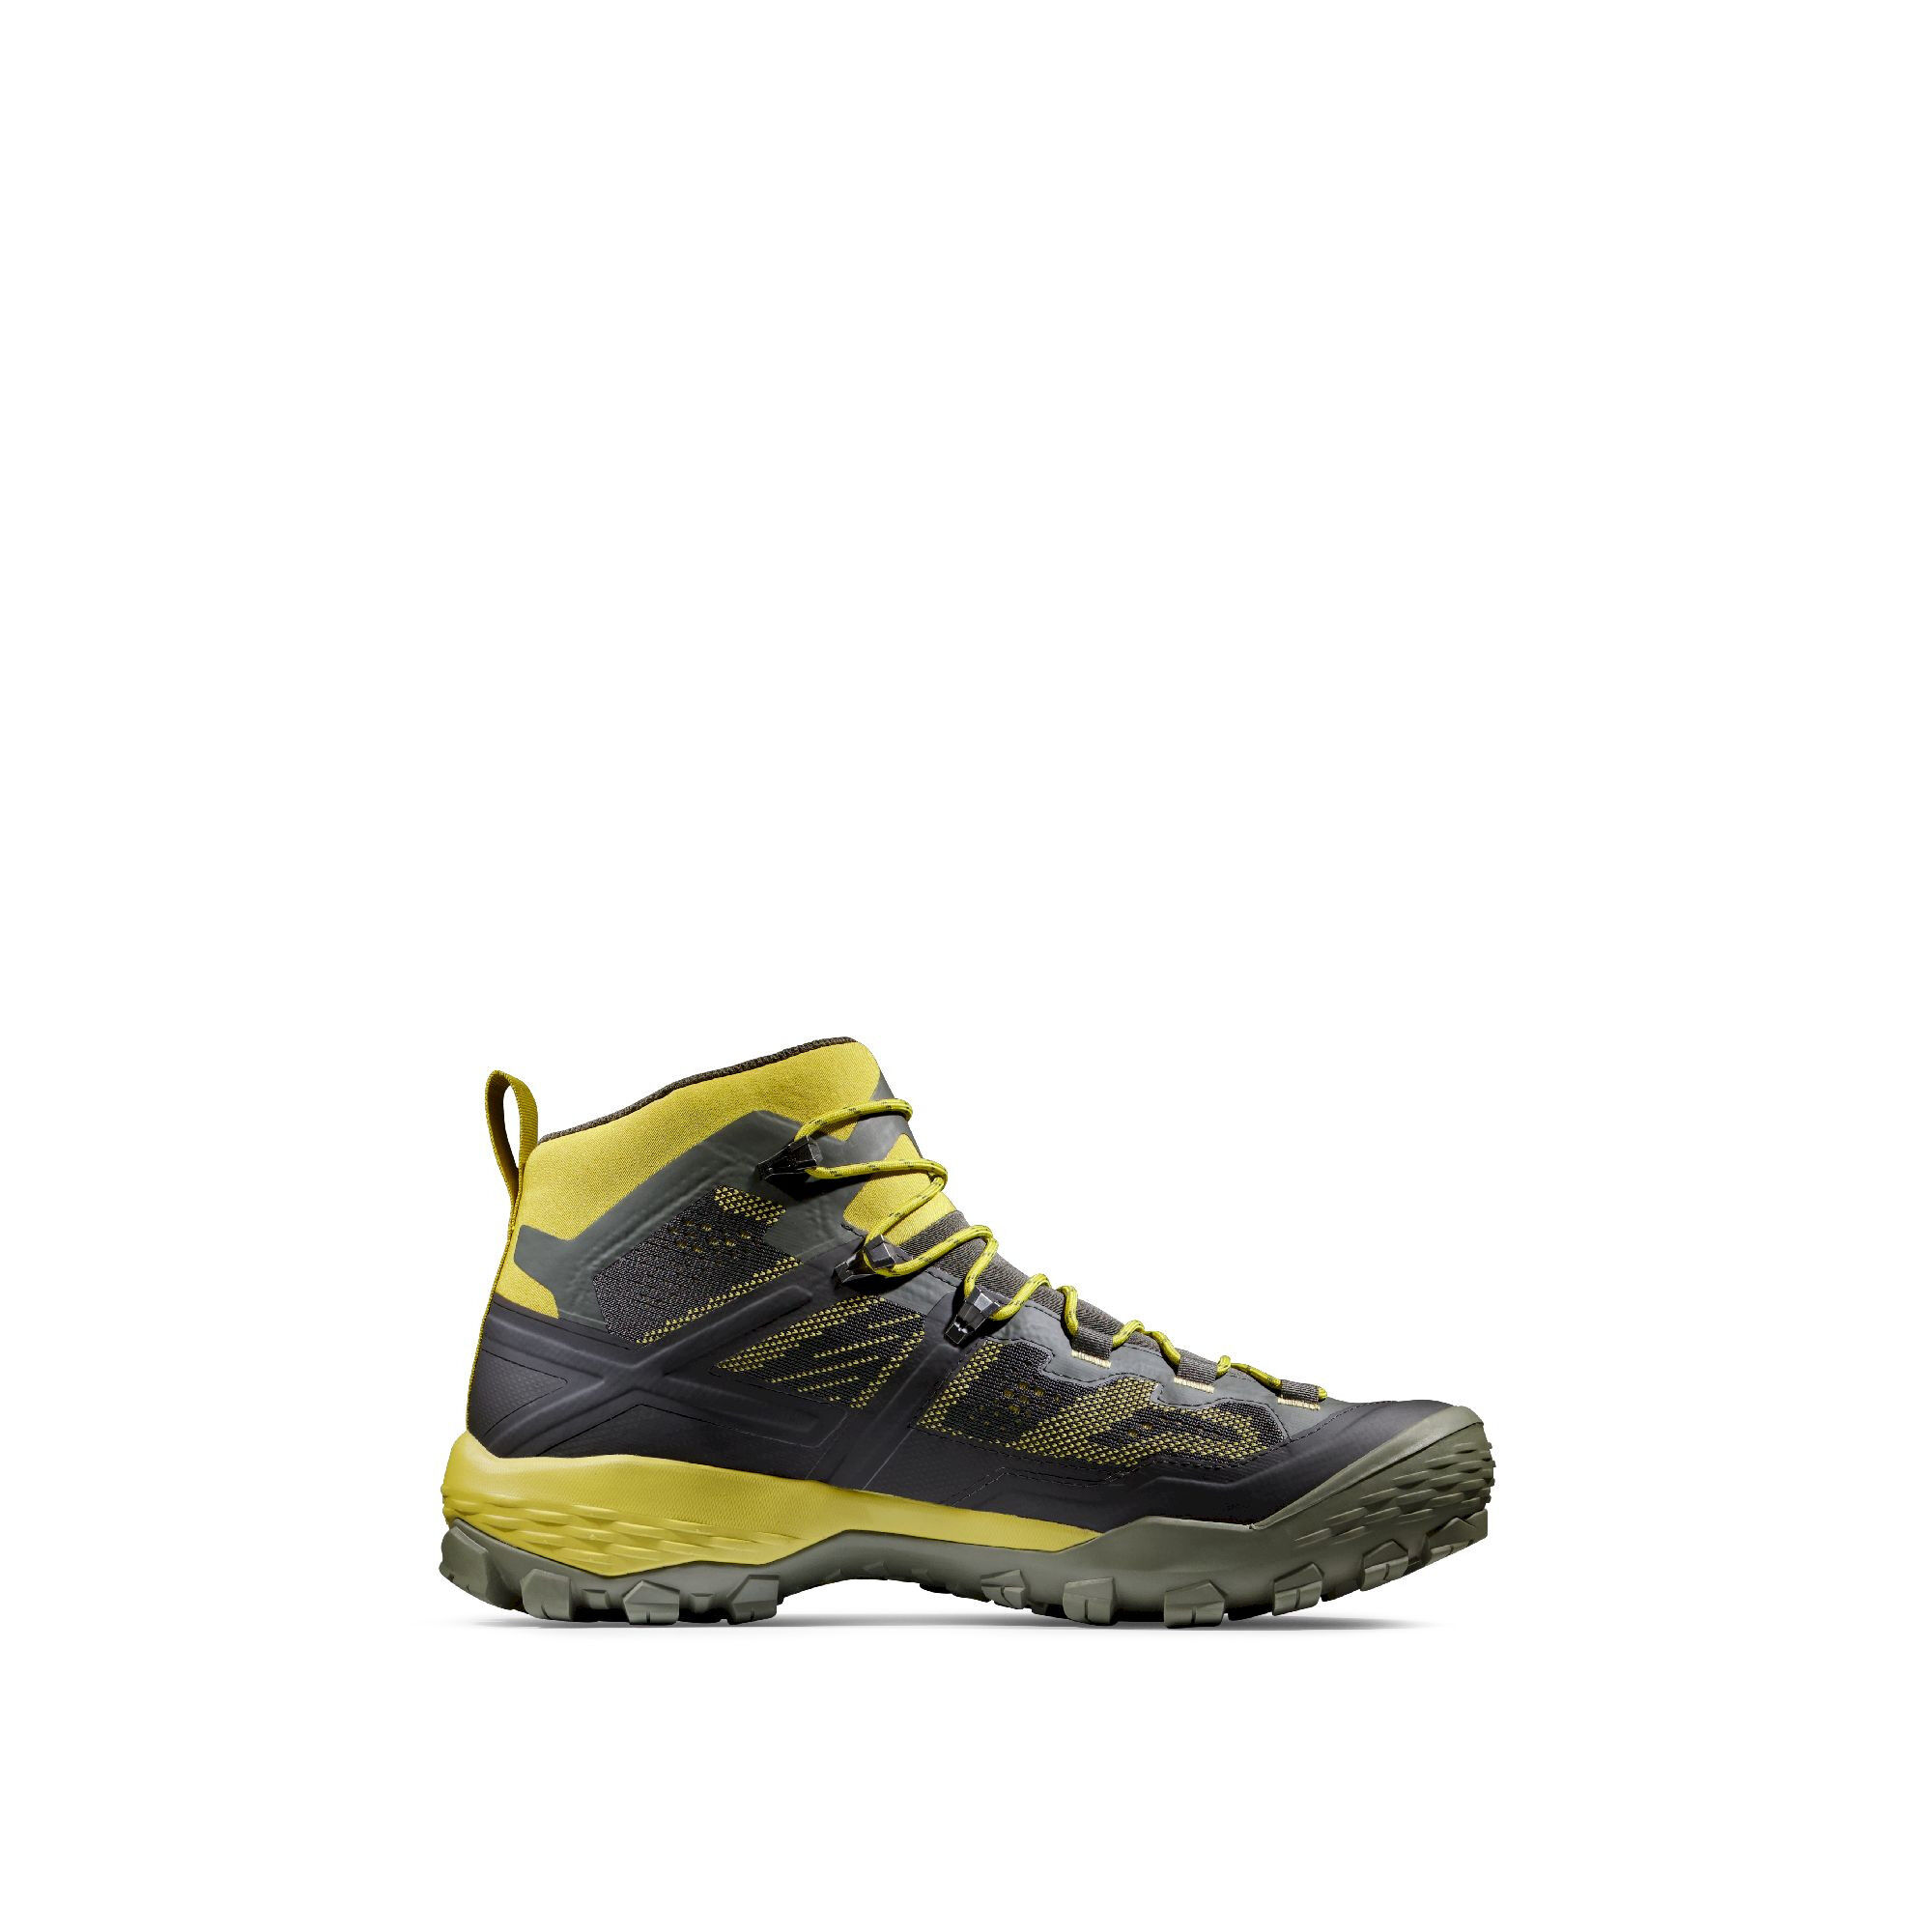 Mammut - Ducan Mid GTX® - Zapatillas de trekking - Hombre